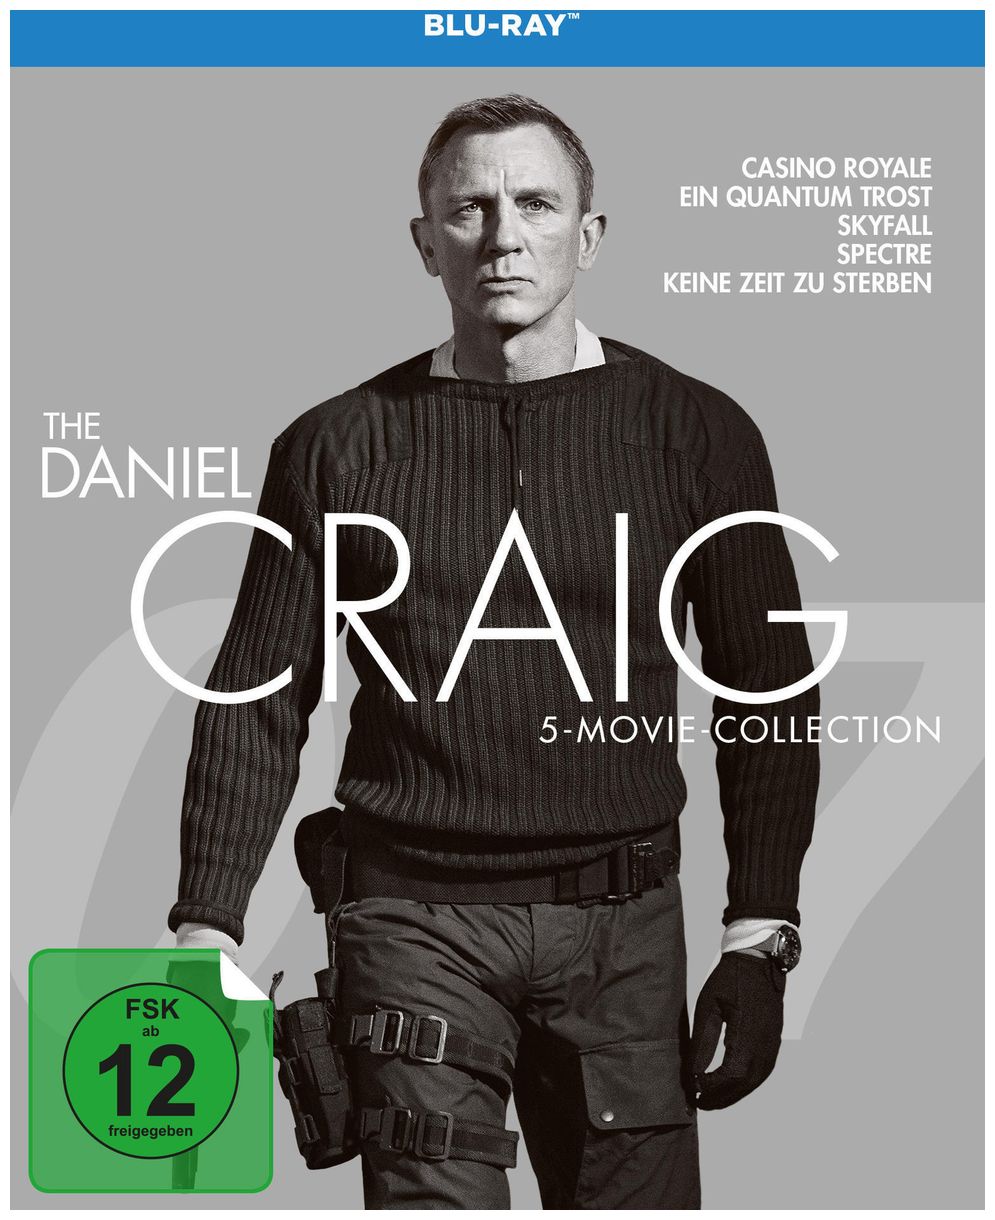 The Daniel Craig 5-Movie-Collection (James Bond) (BLU-RAY) 